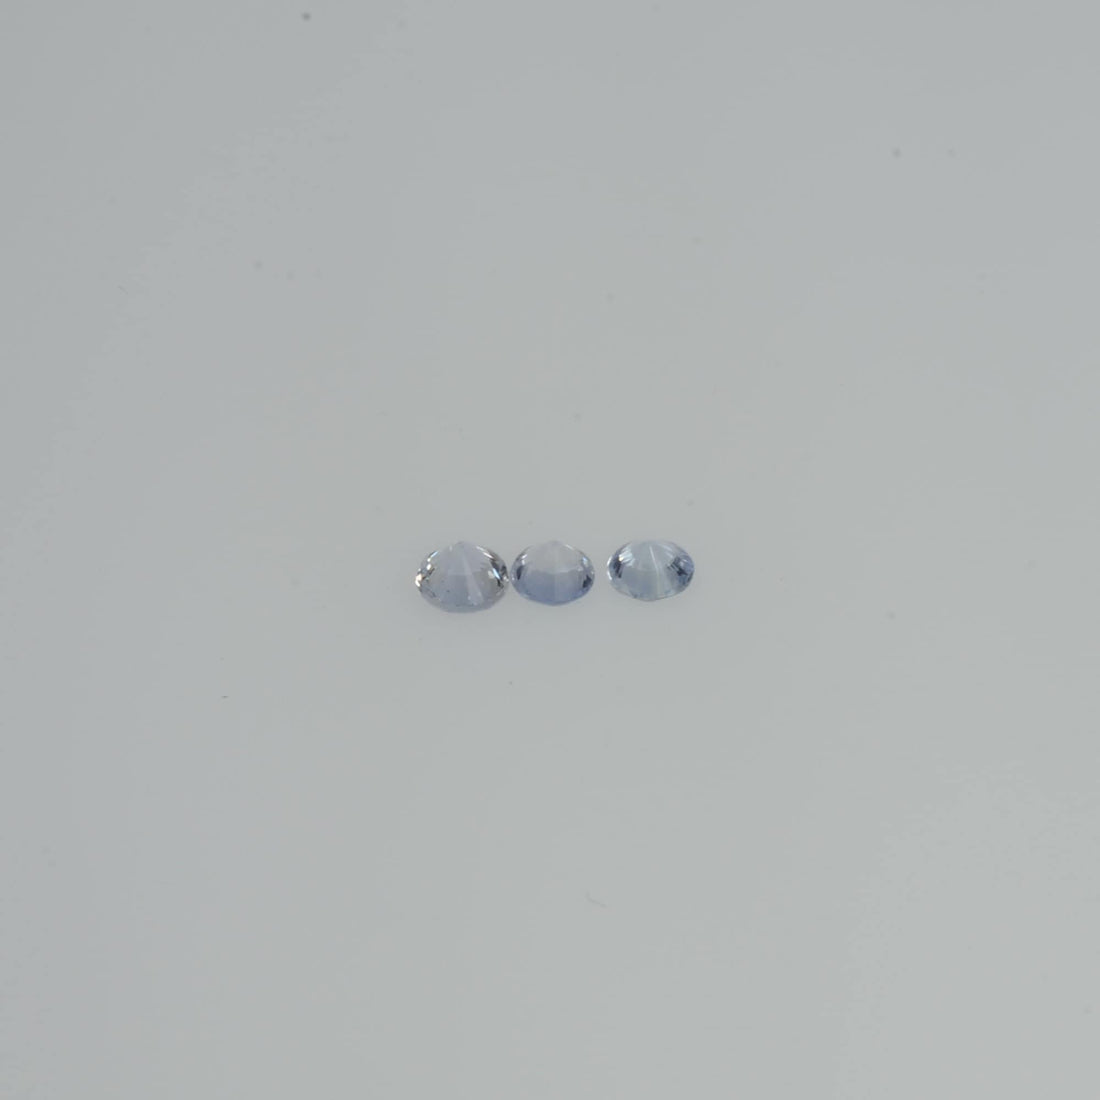 1.5-3.5 mm Natural Bluish White Sapphire Loose Vs Quality Gemstone Round Diamond Cut